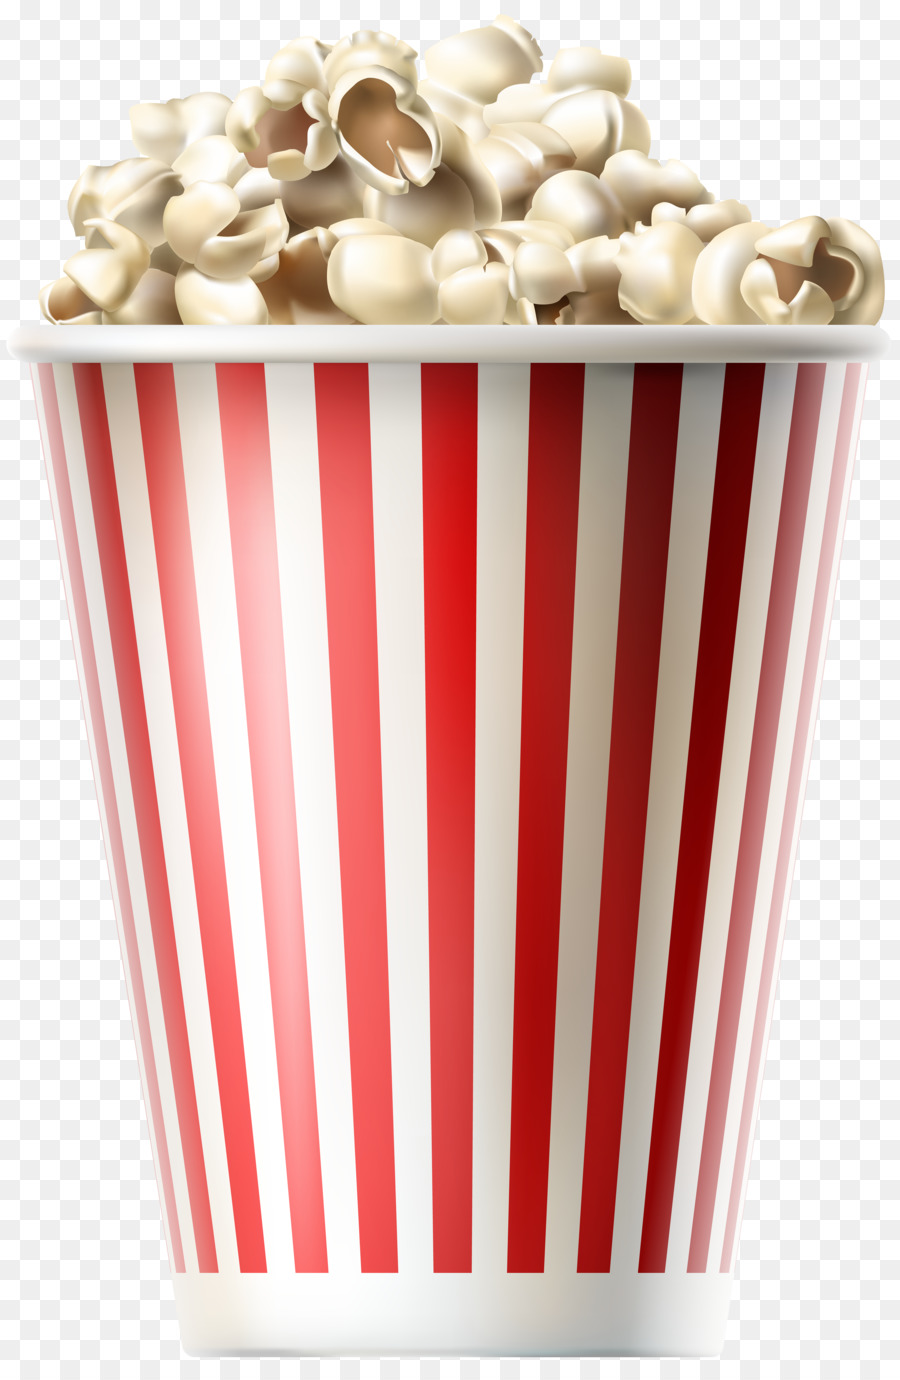 Popcorn Cinema Film Clip art - Popcorn